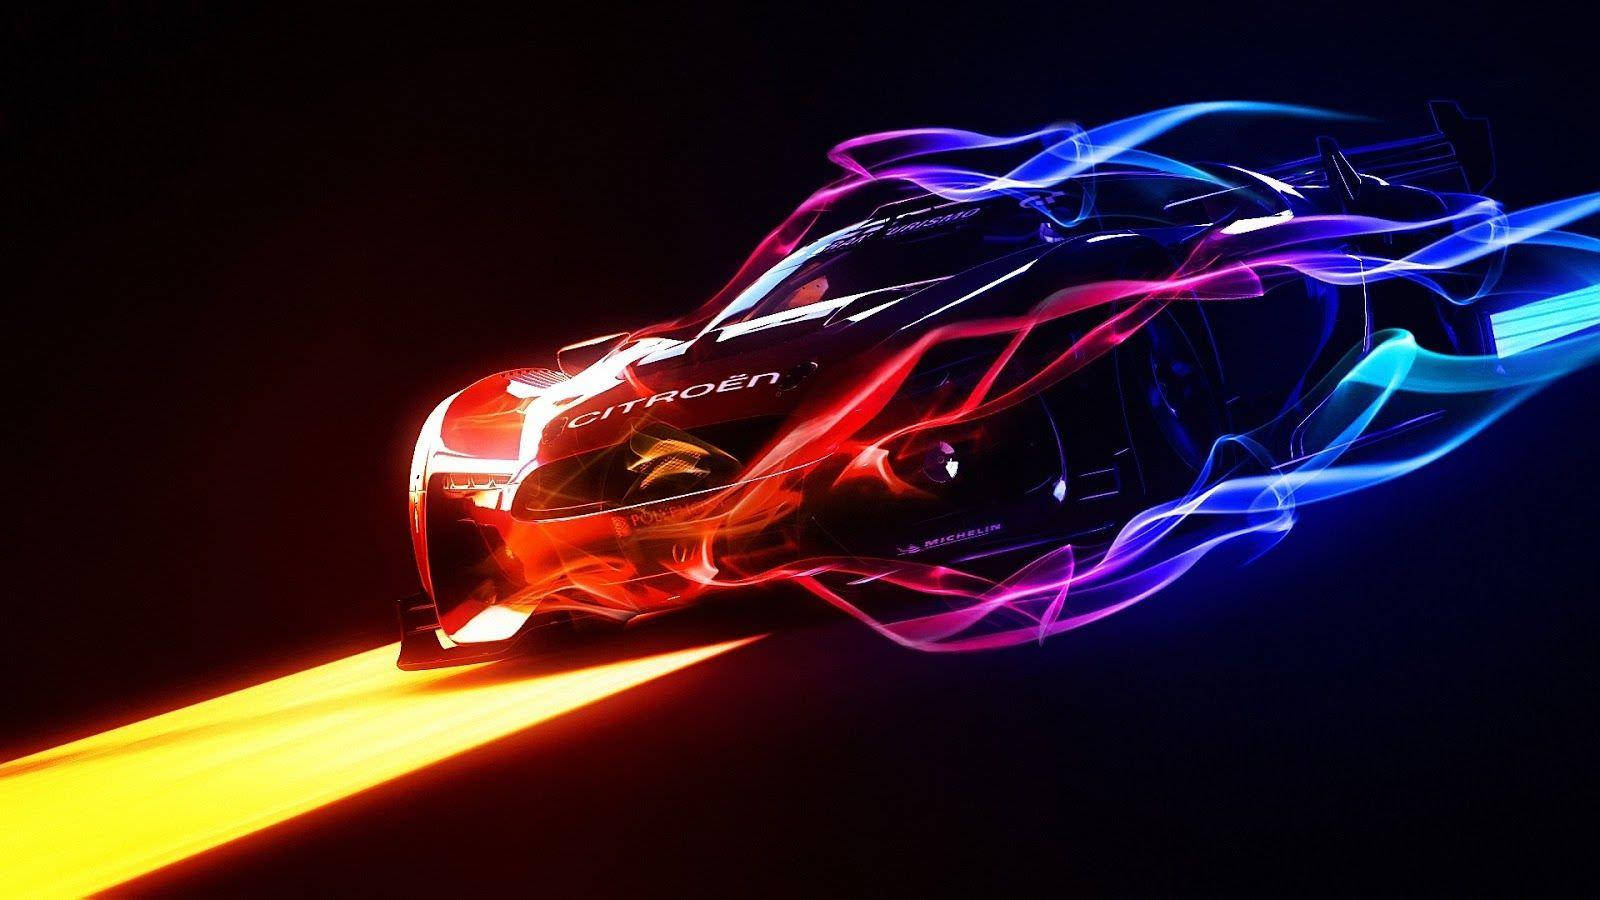 Futuristic Neon Fire Car on a Dynamic Desktop Wallpaper